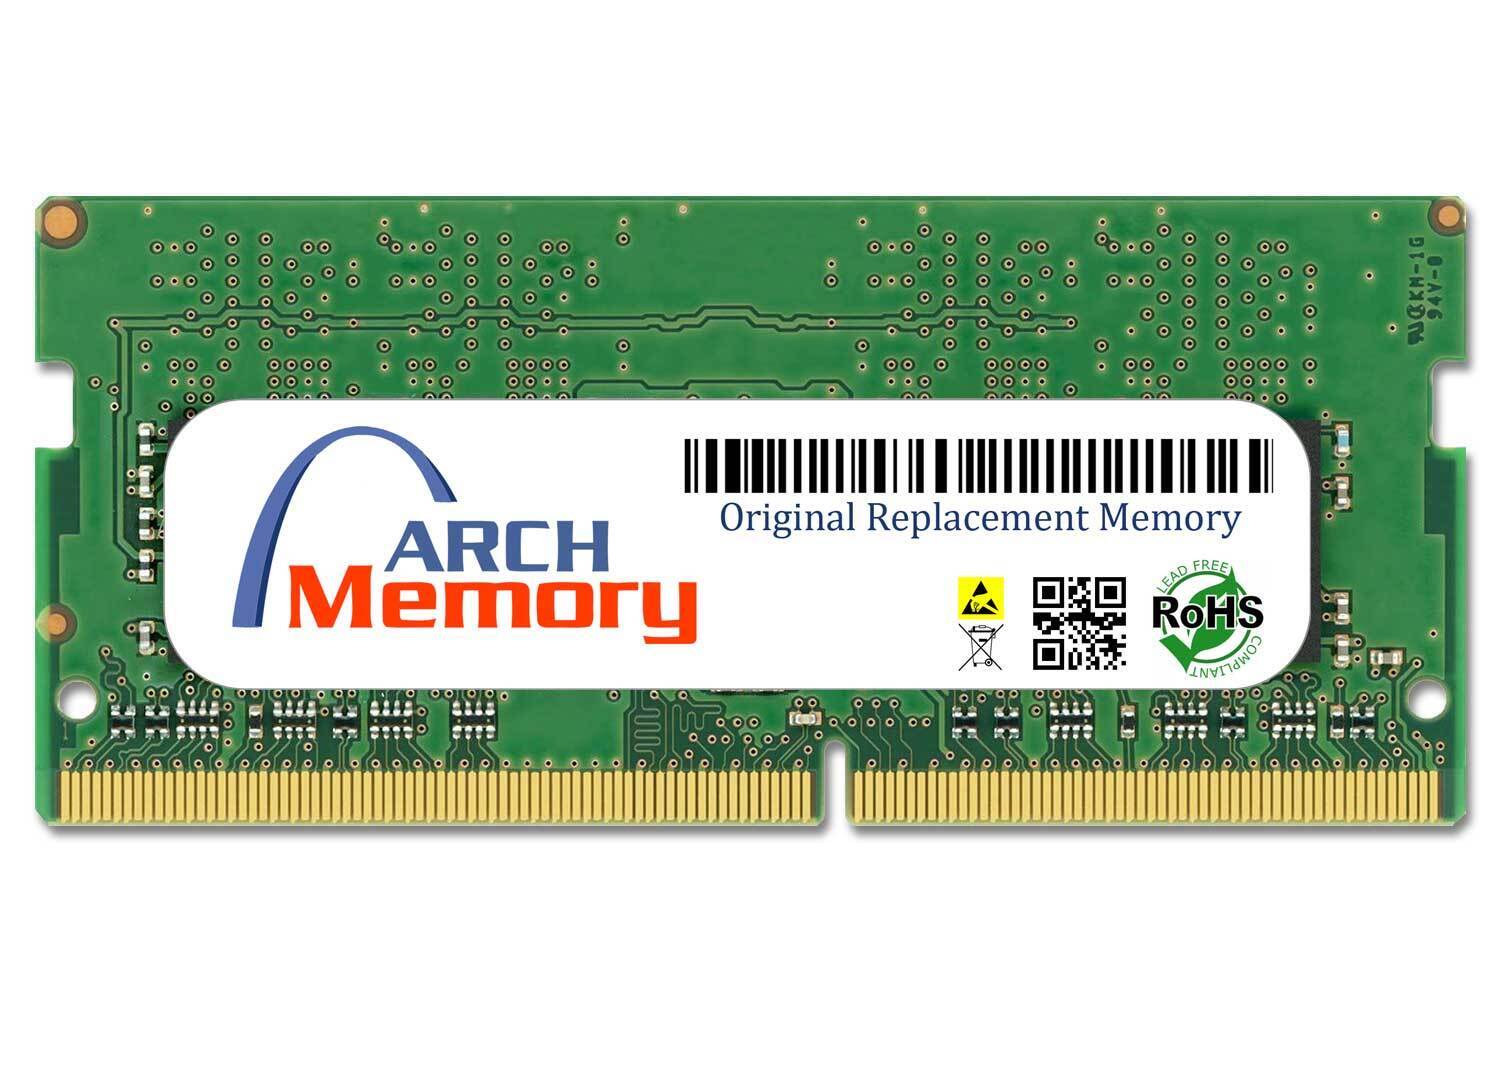 8GB 4X70M60574 260-Pin DDR4-2400 So-dimm RAM Memory for Lenovo